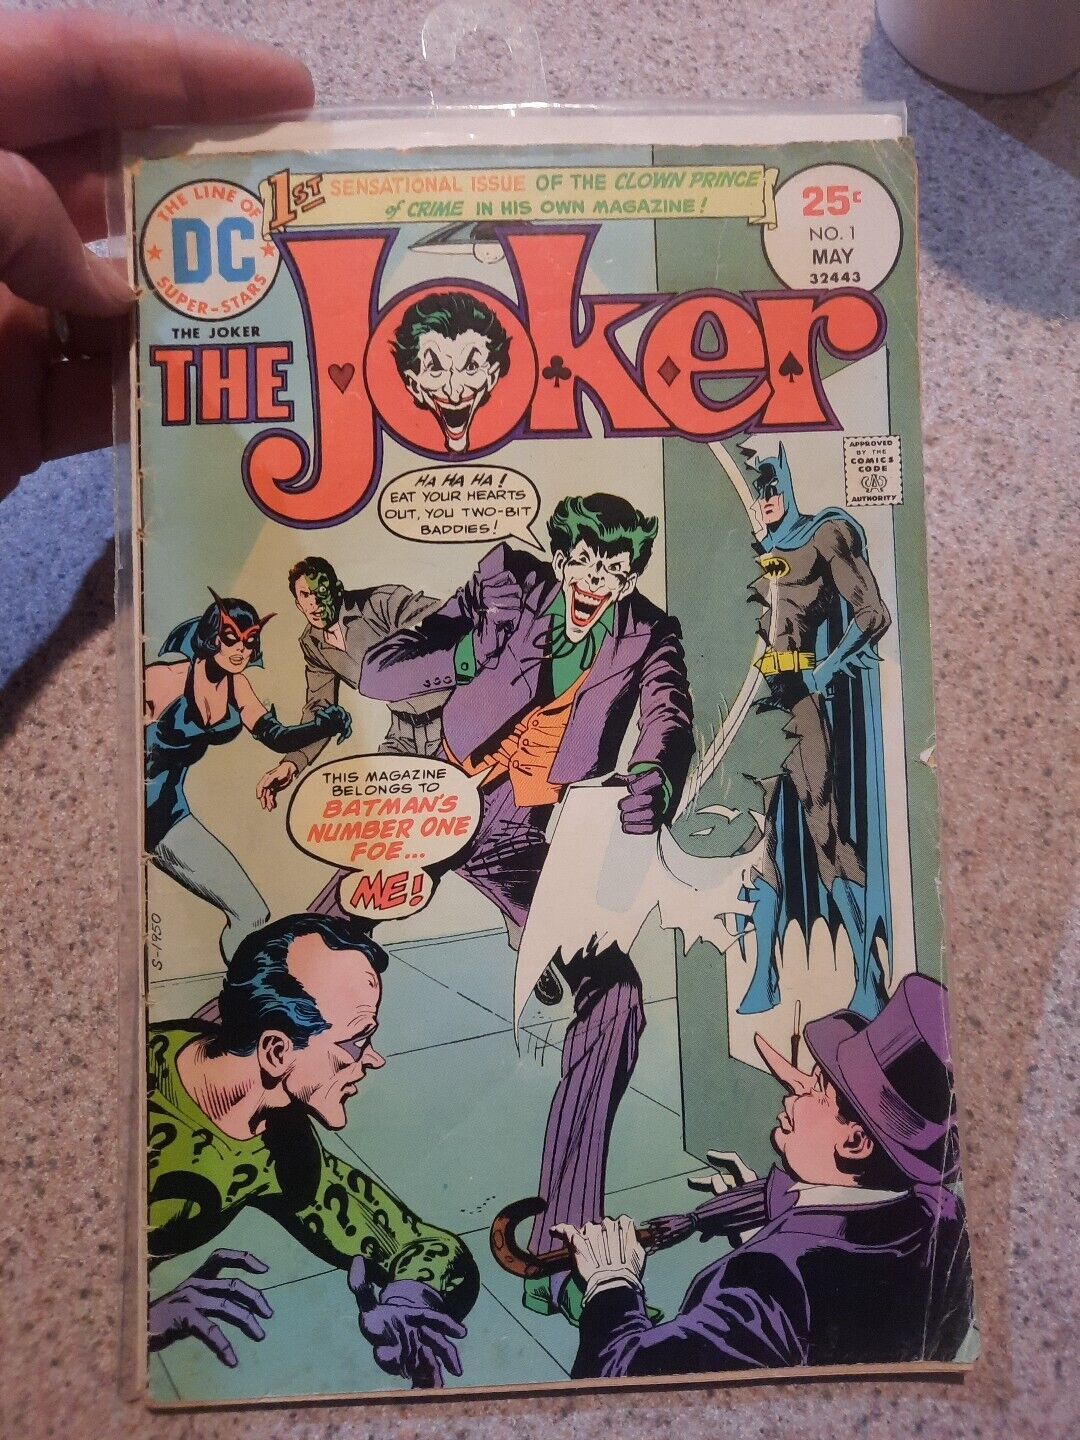 The Joker #1 (DC Comics, May 1975)